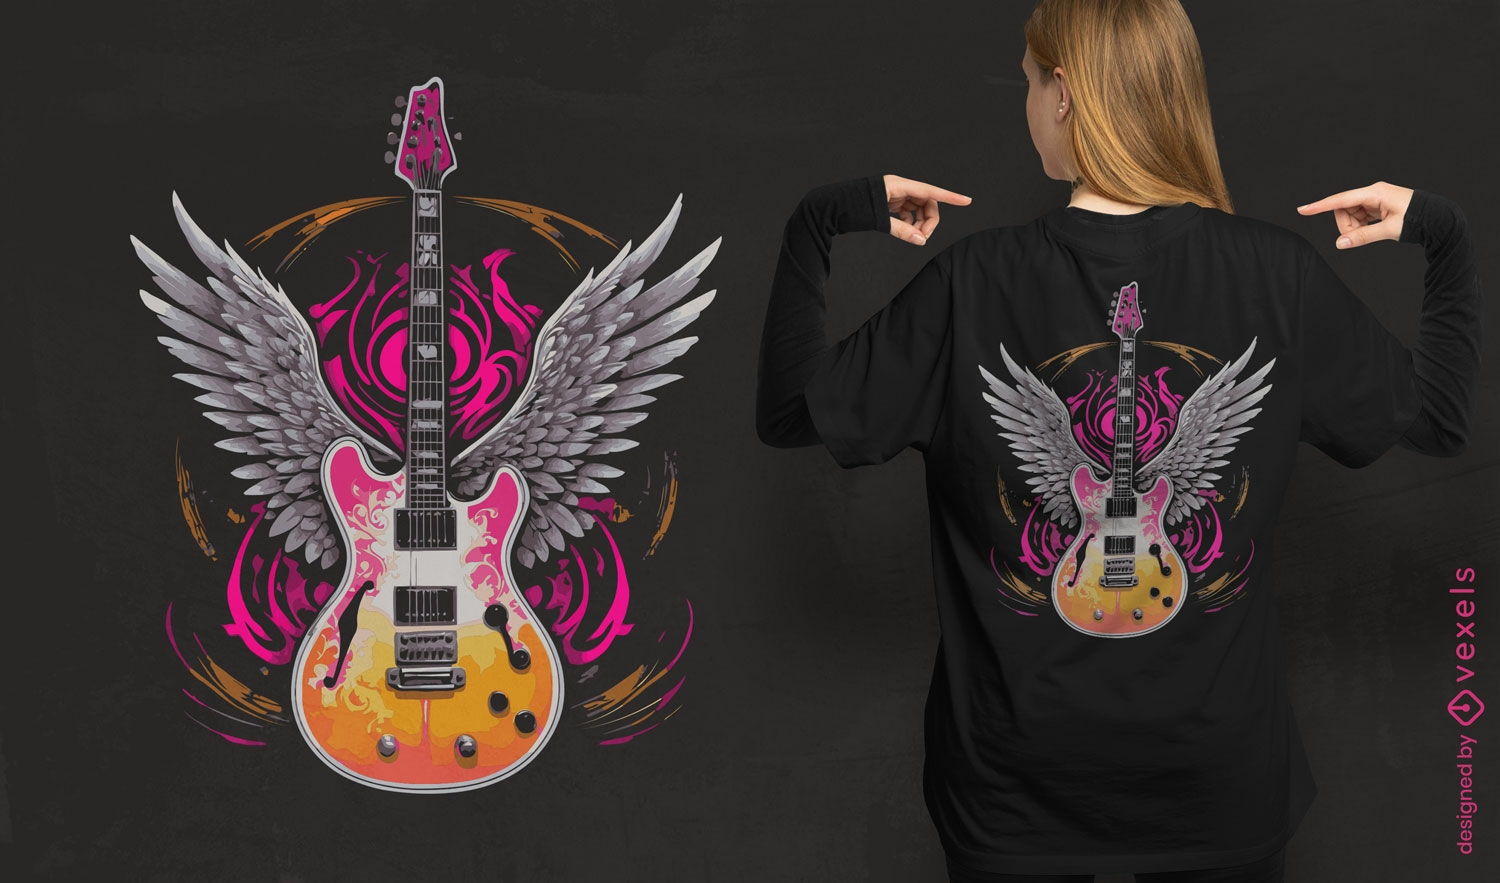 Winged guitar rock t-shirt design